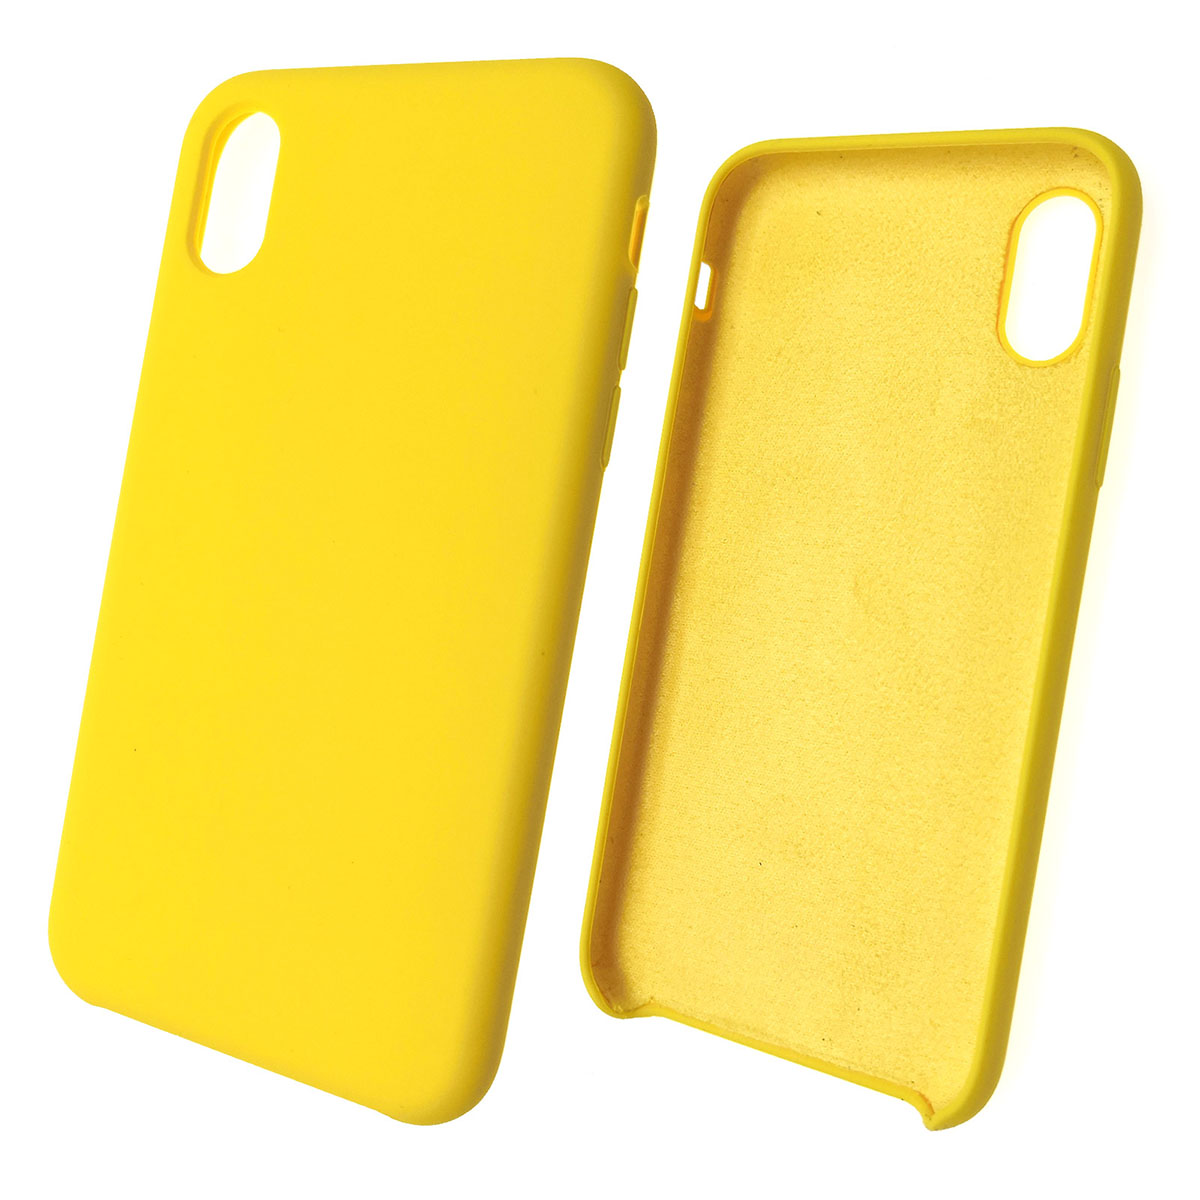 Чехол накладка Silicon Case для APPLE iPhone X, iPhone XS, силикон, бархат, цвет желтый